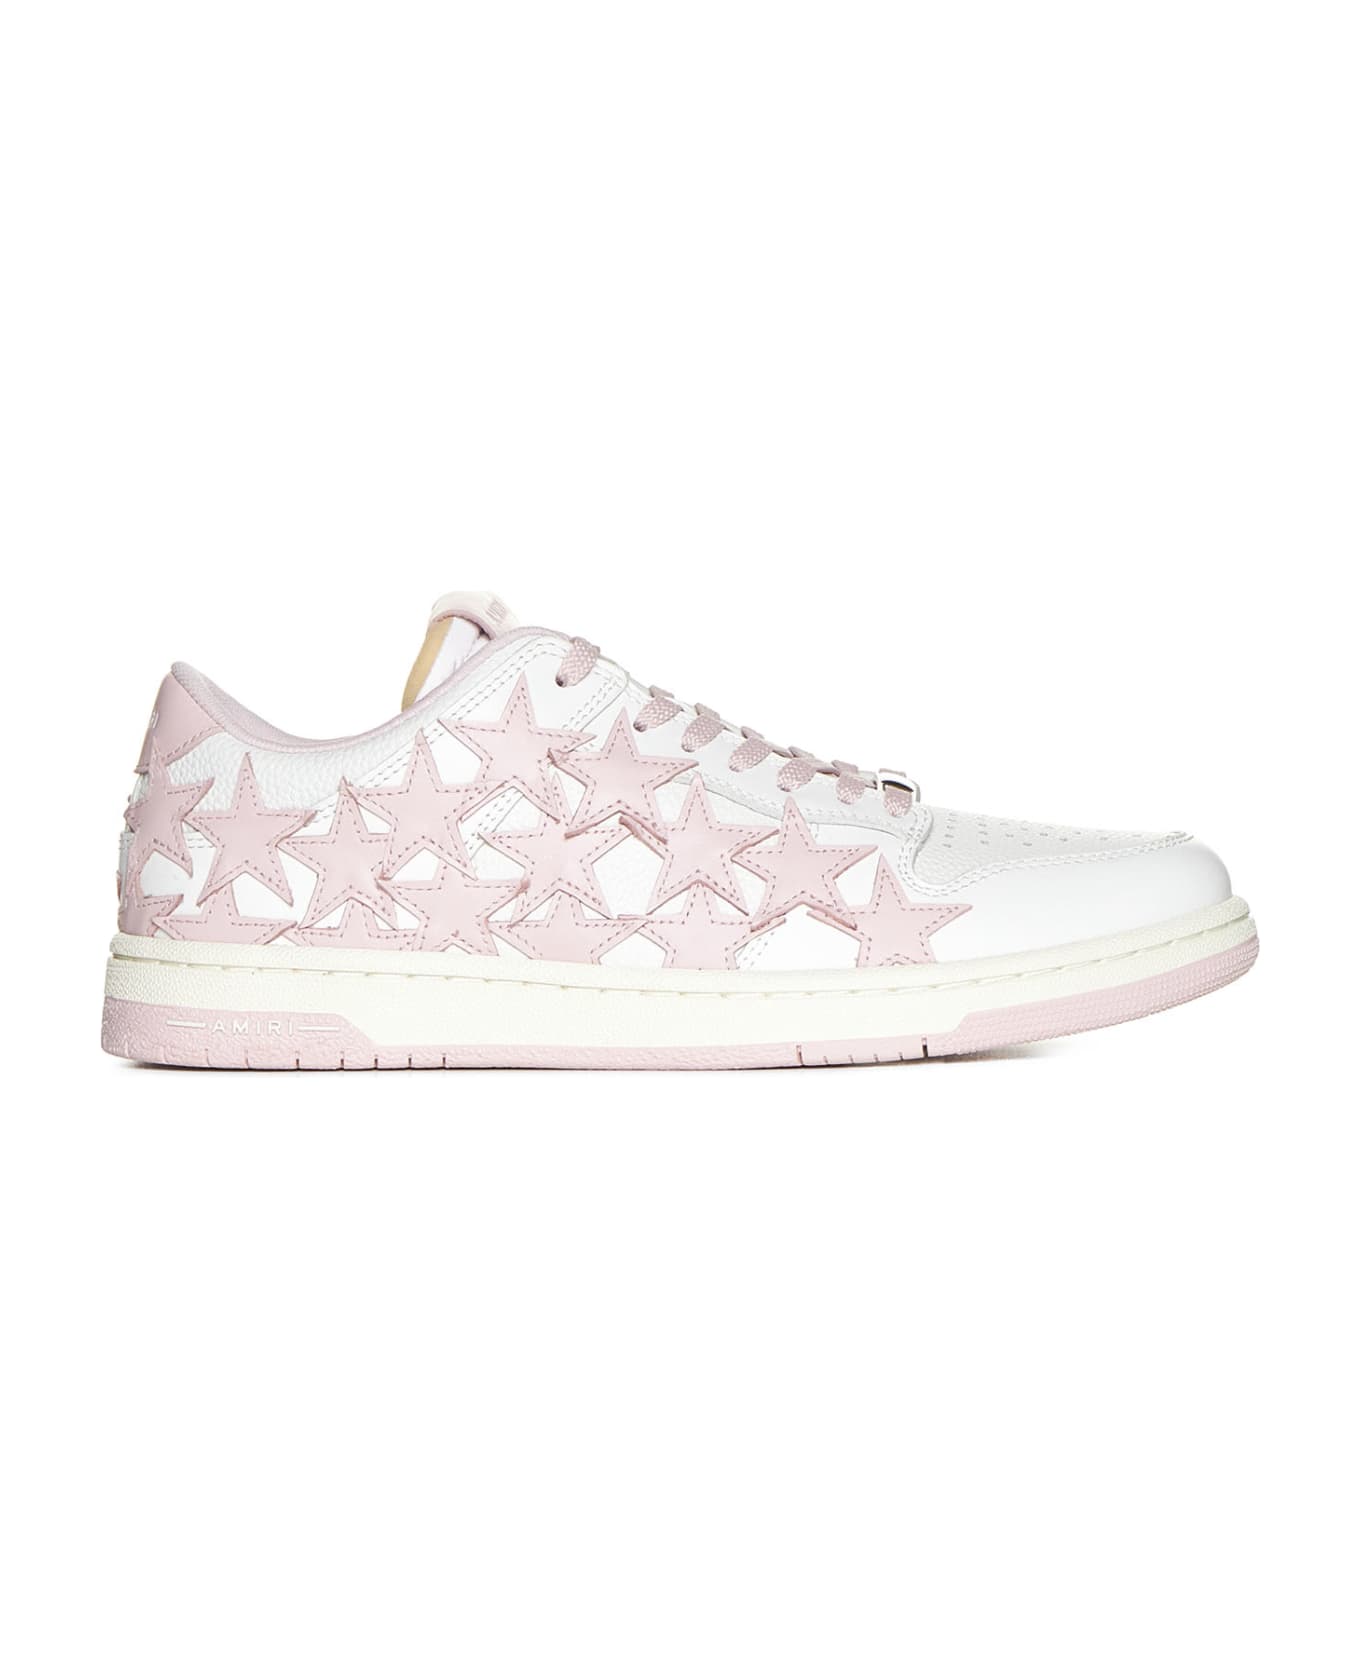 AMIRI Sneakers - White pink